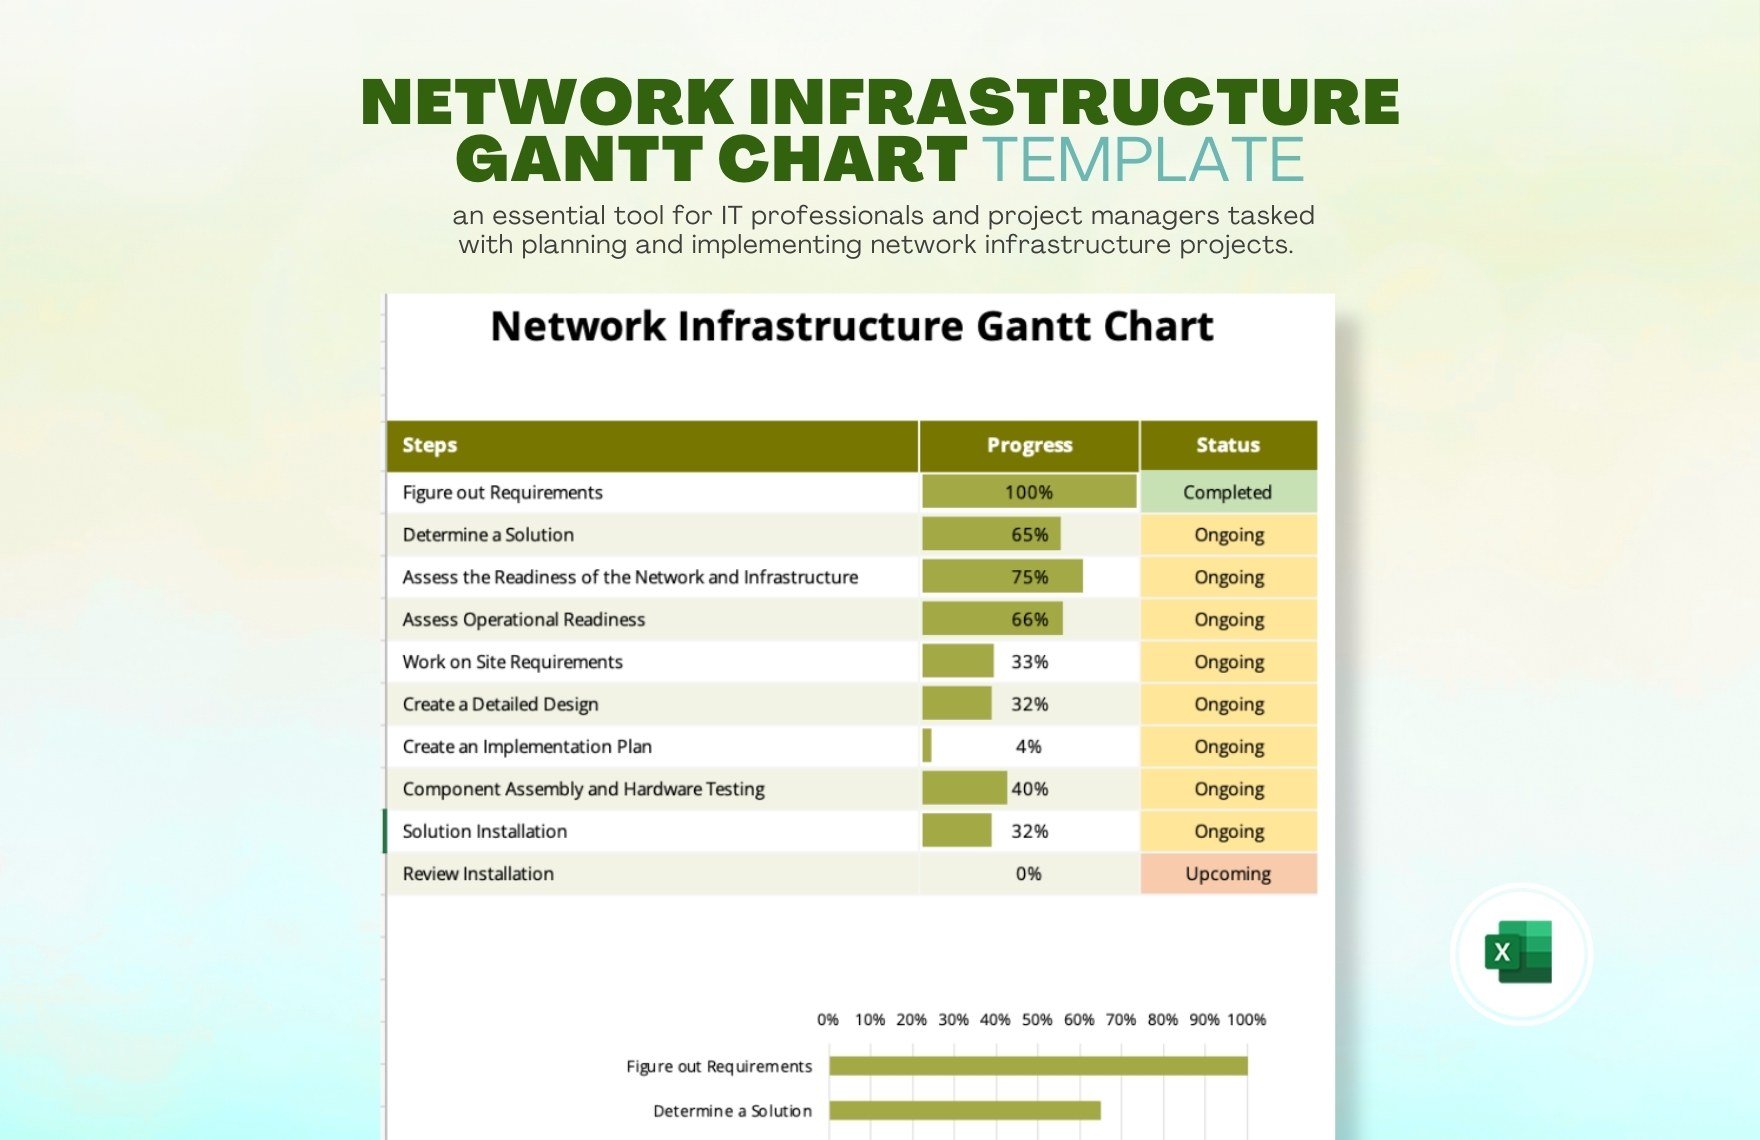 Network Infrastructure Gantt Chart Template in Excel